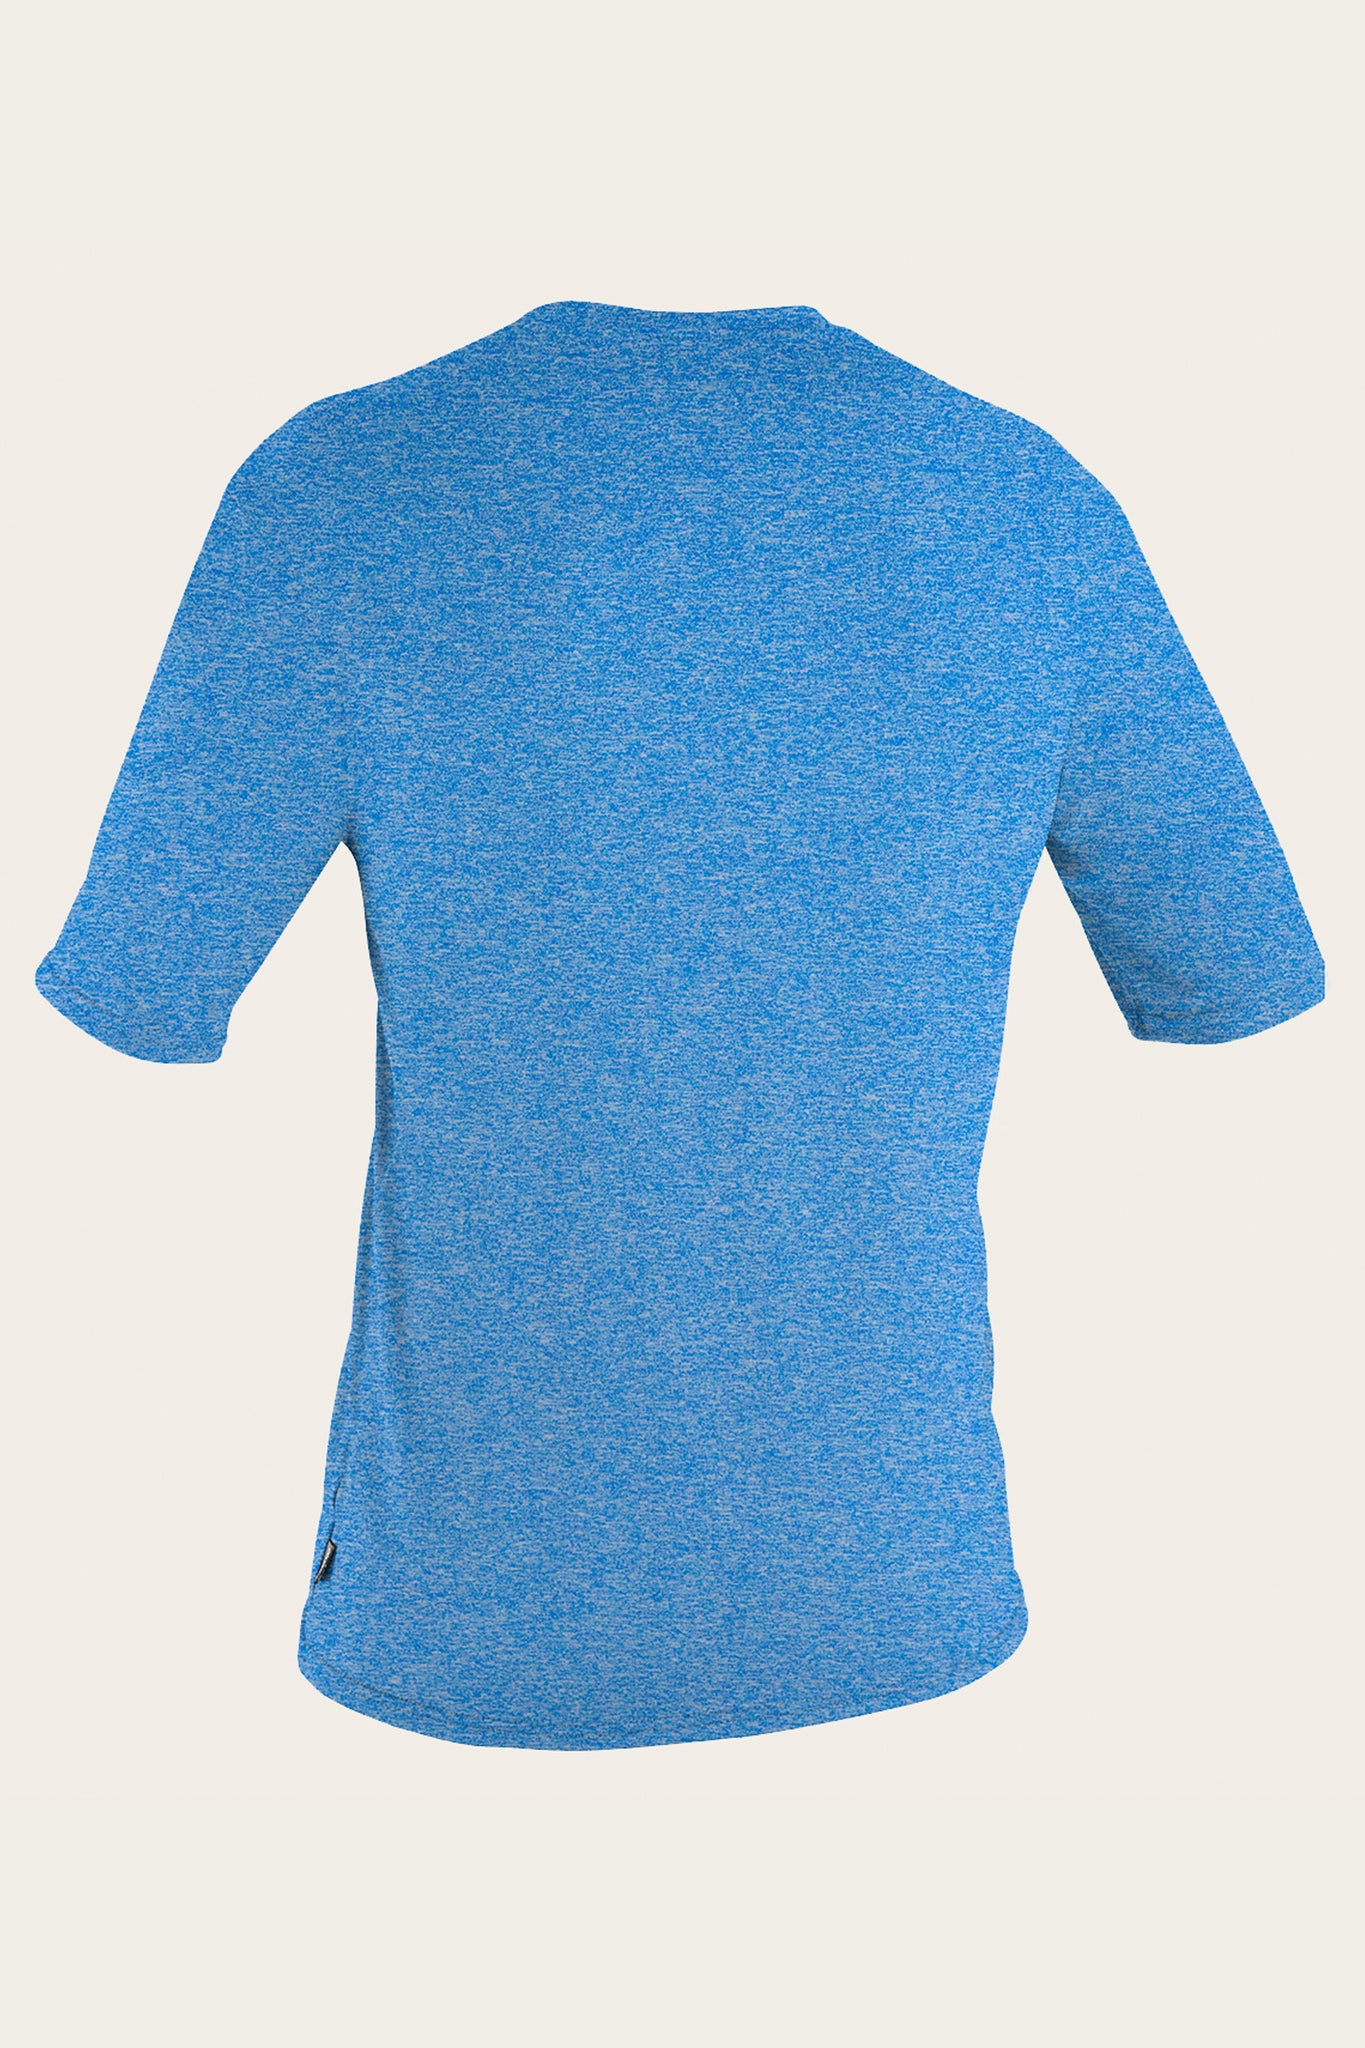 Youth Hybrid S/S Sun Shirt - Brite Blue | O'Neill